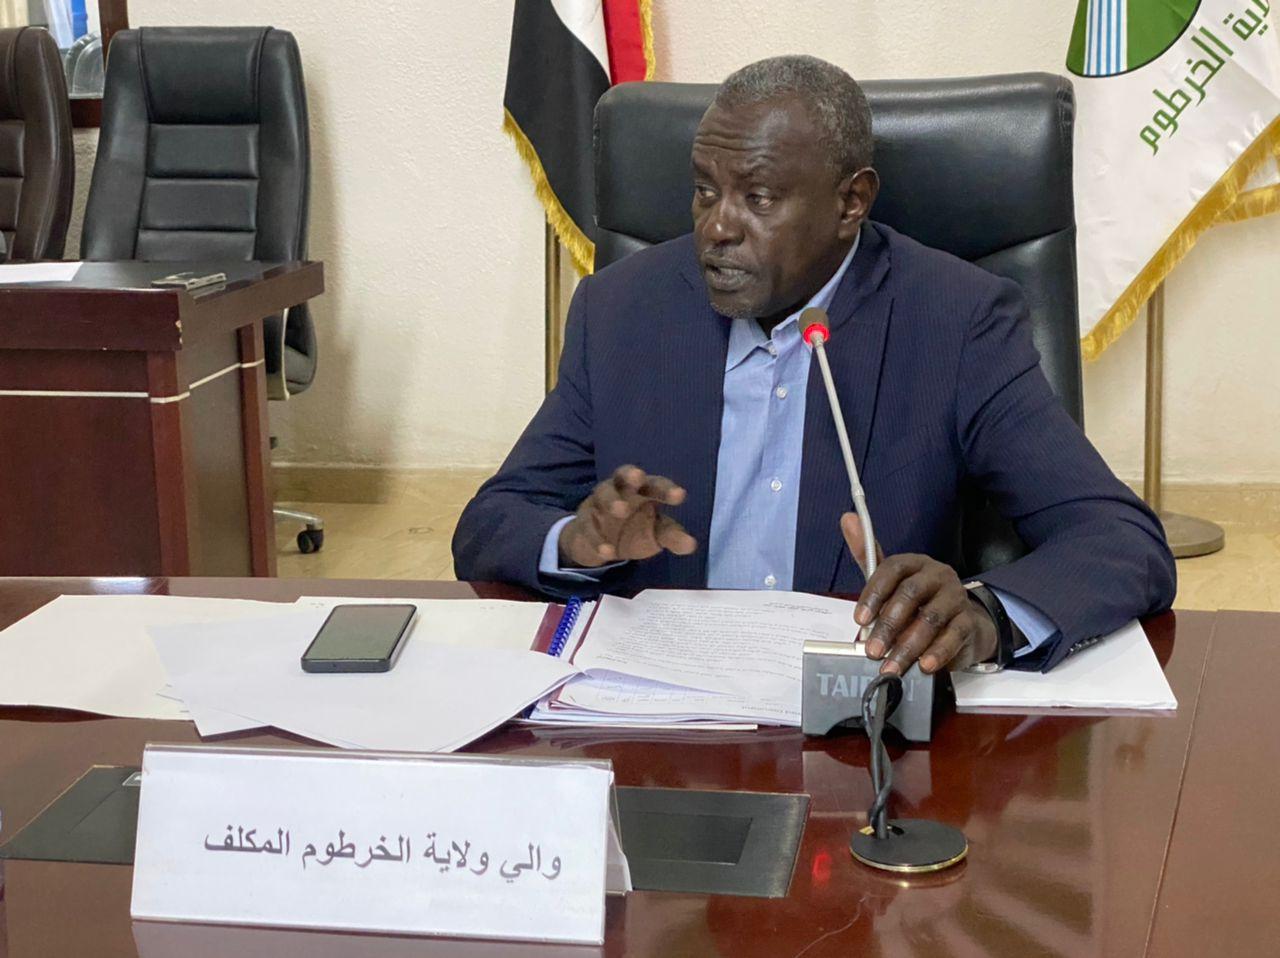 Khartoum declares curfew over security concerns